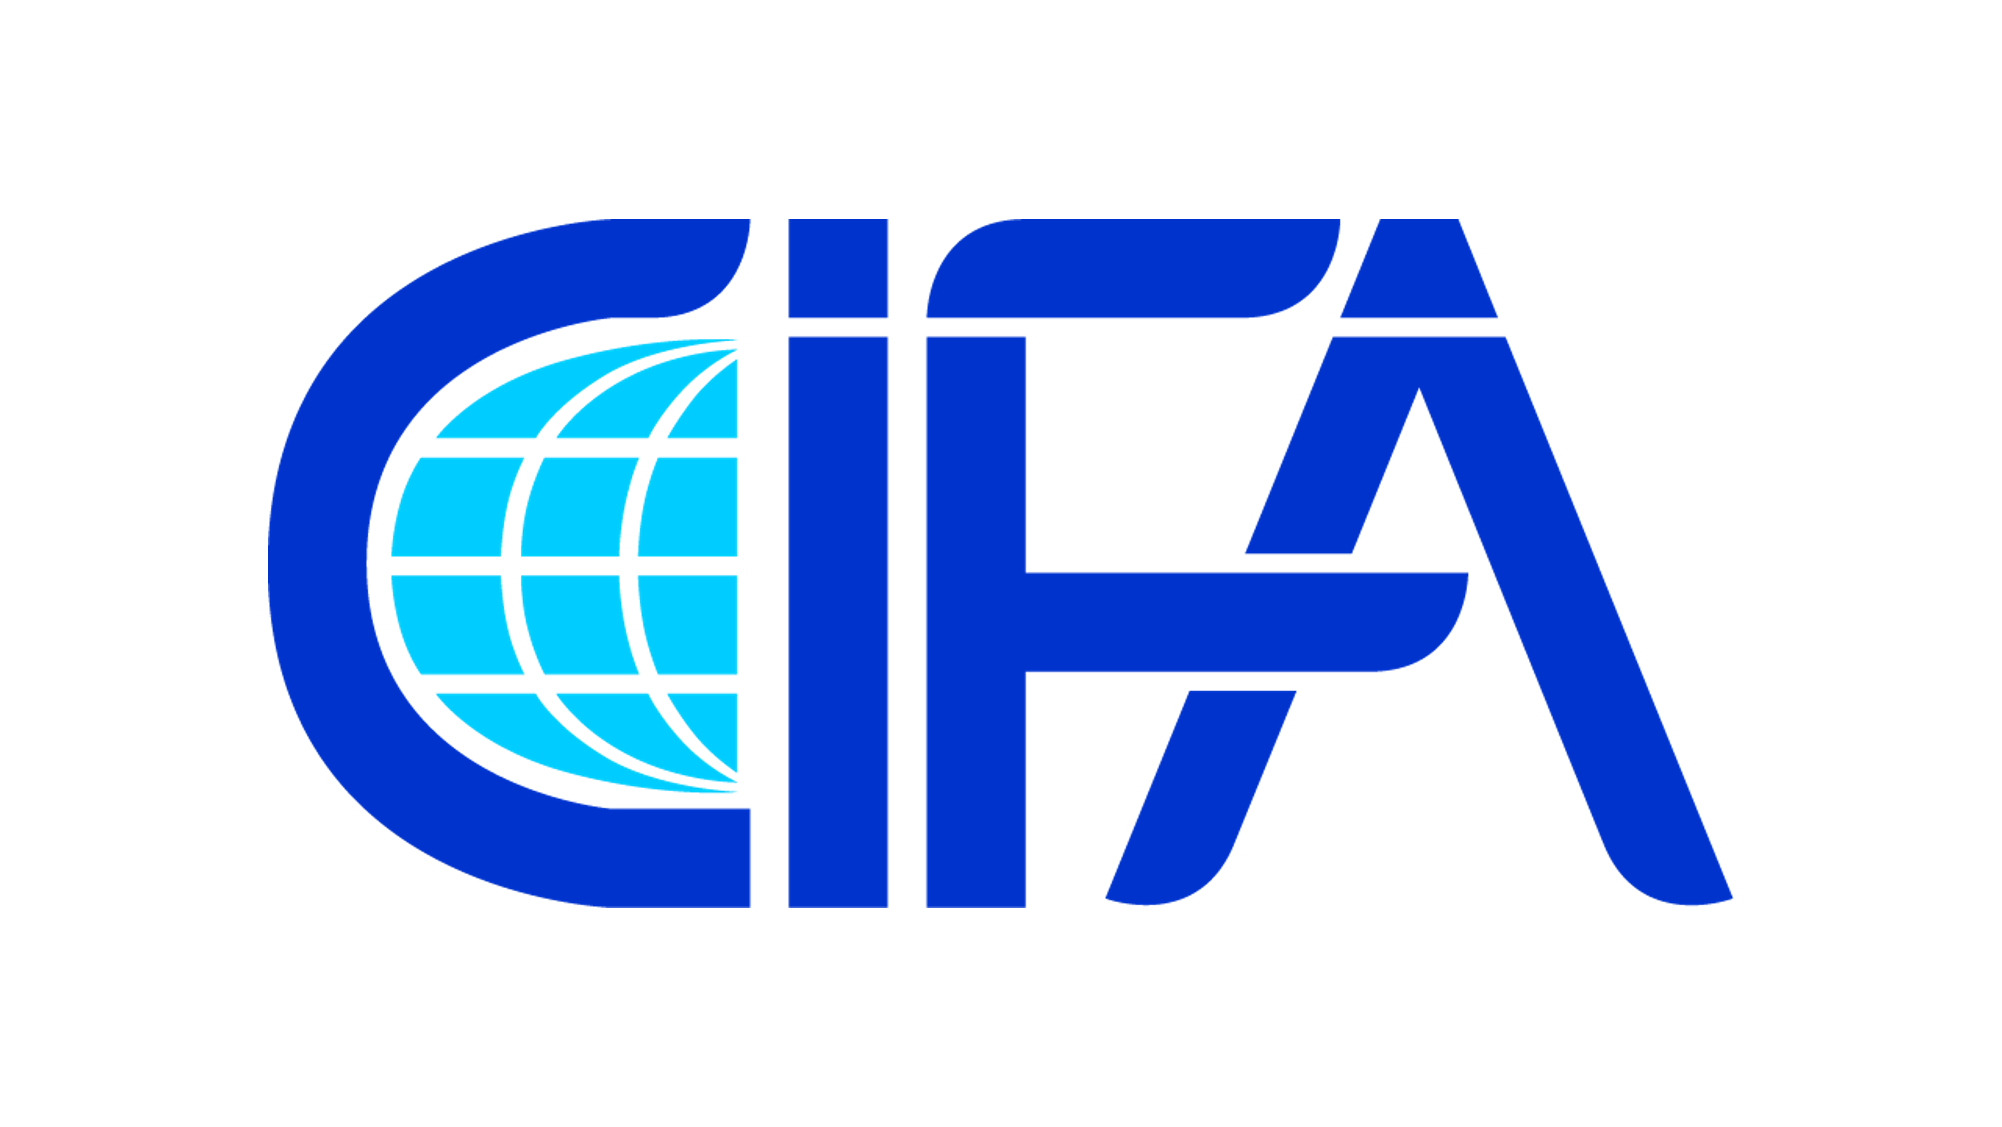 China International Freight Forwarders Association